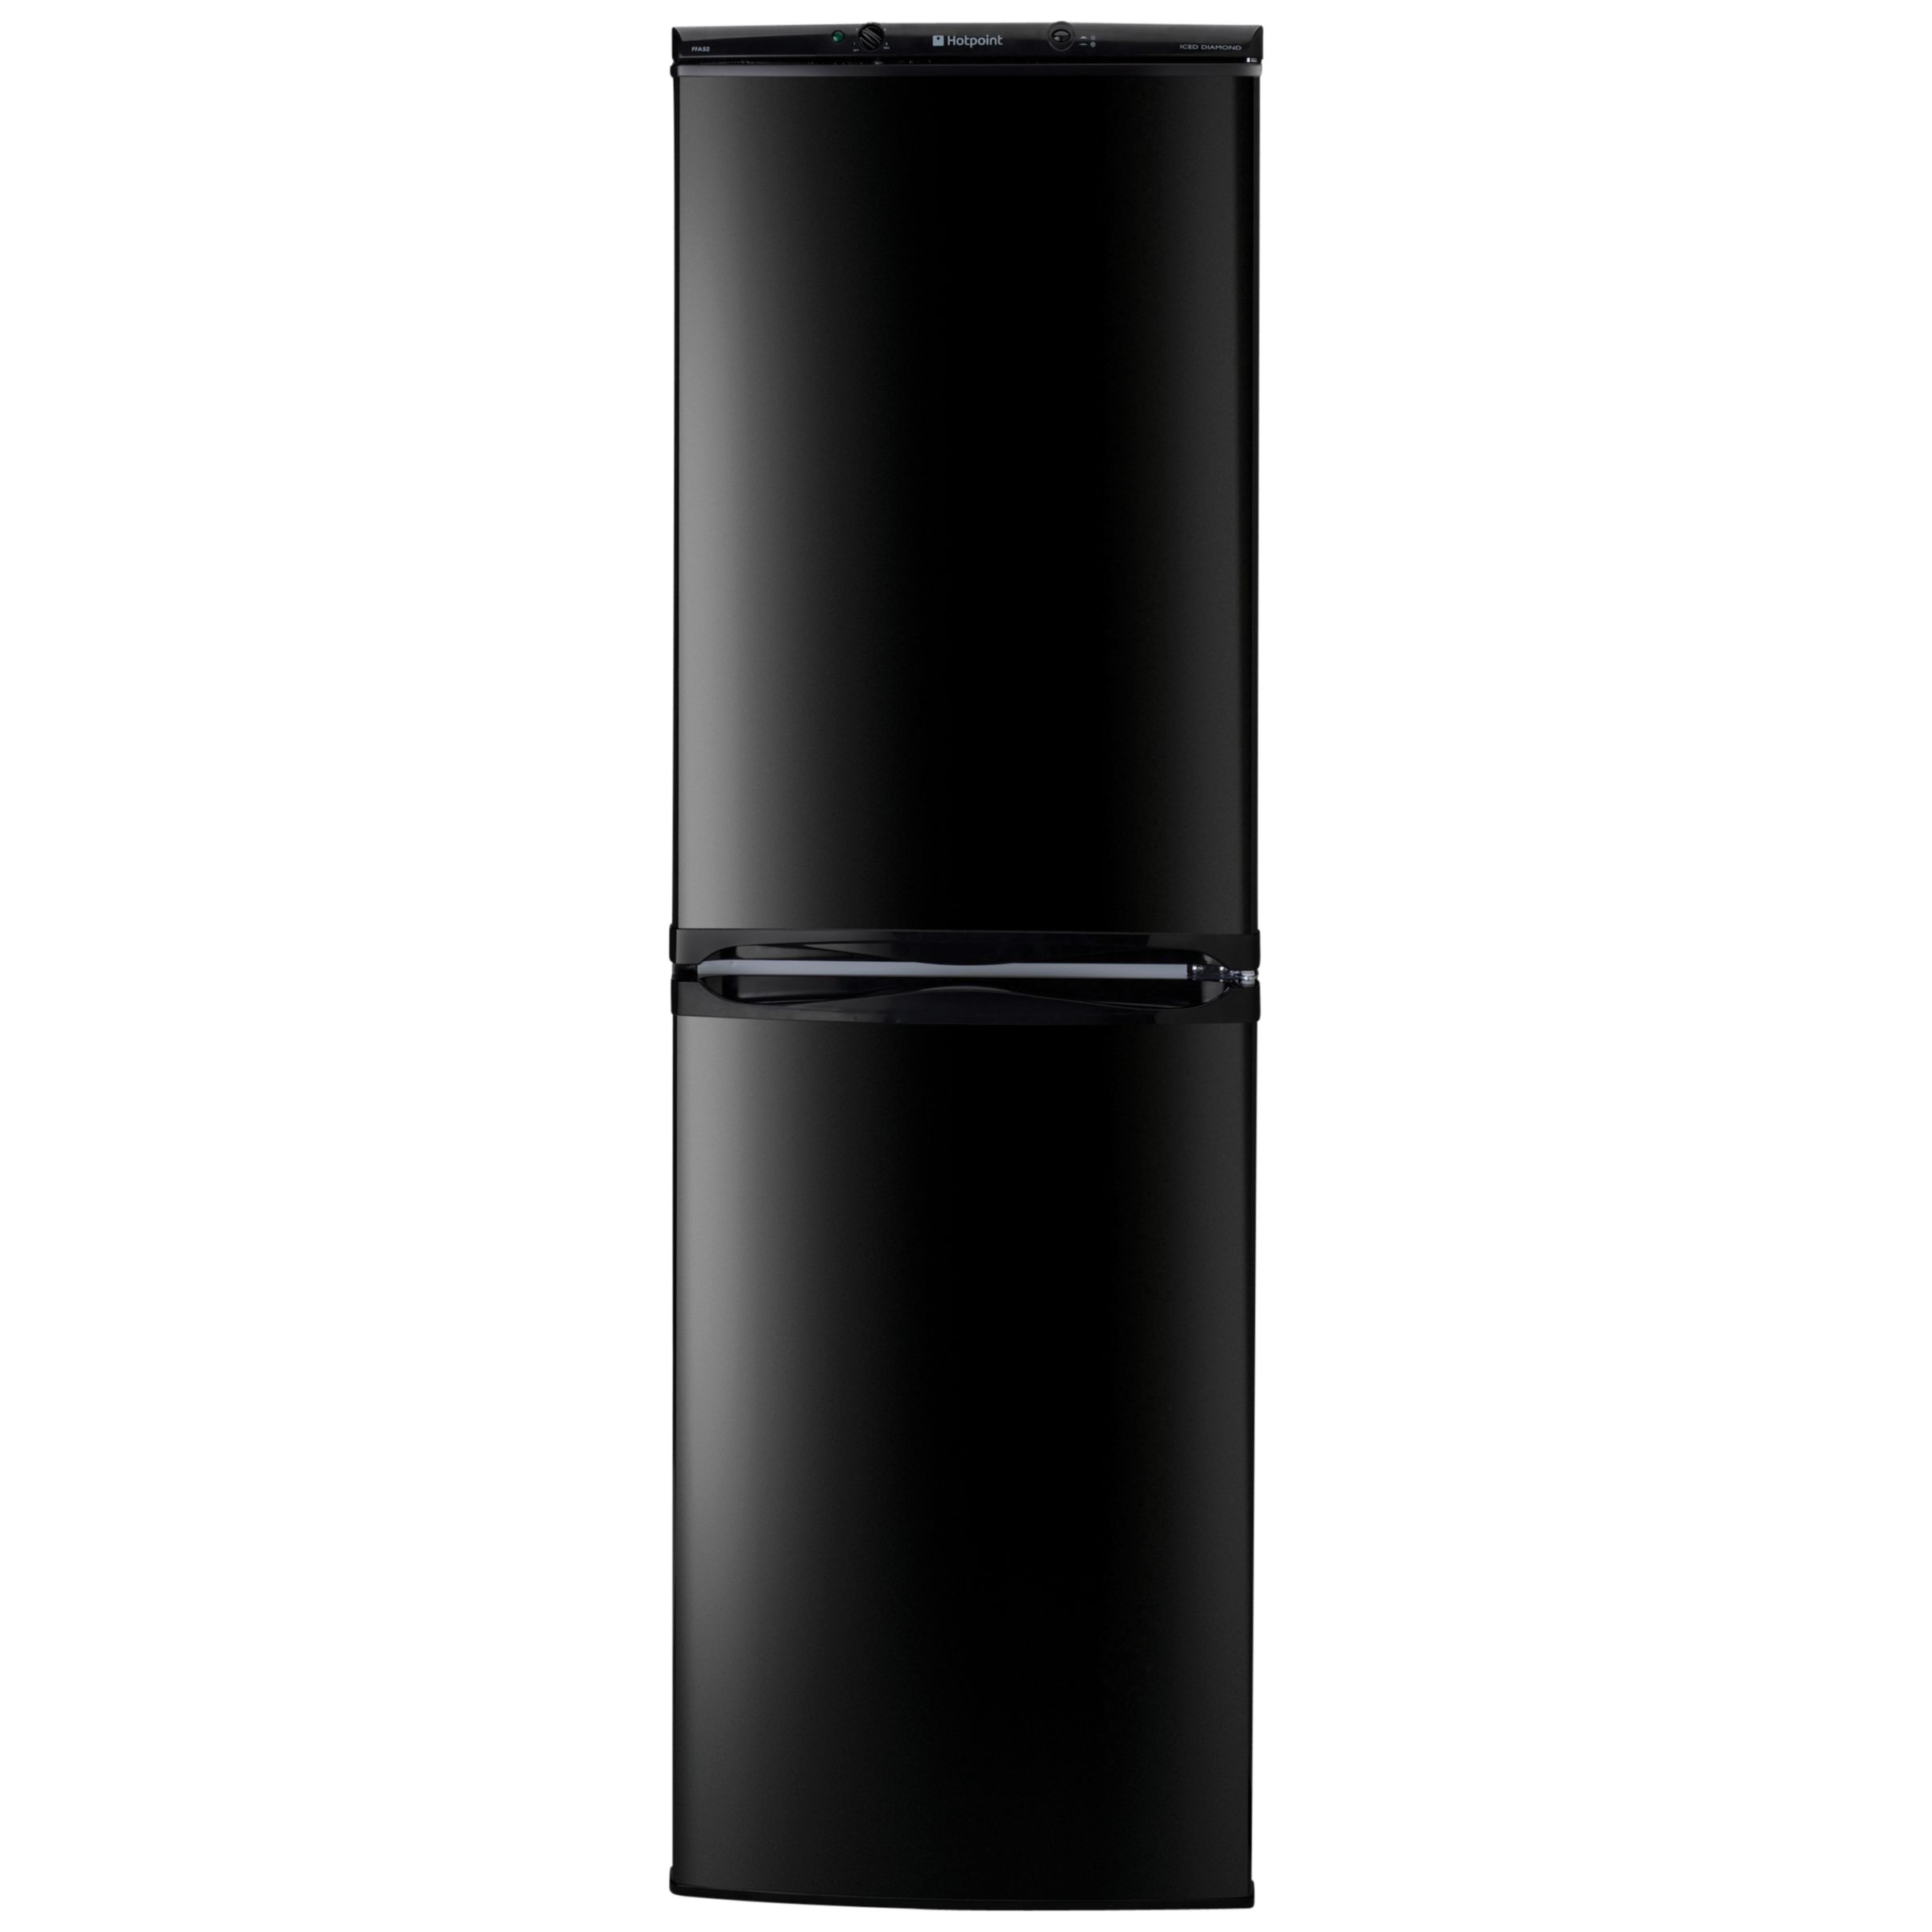 Hotpoint FFAA52K.1 Fridge Freezer, A+ Rated, 55cm Wide, Black